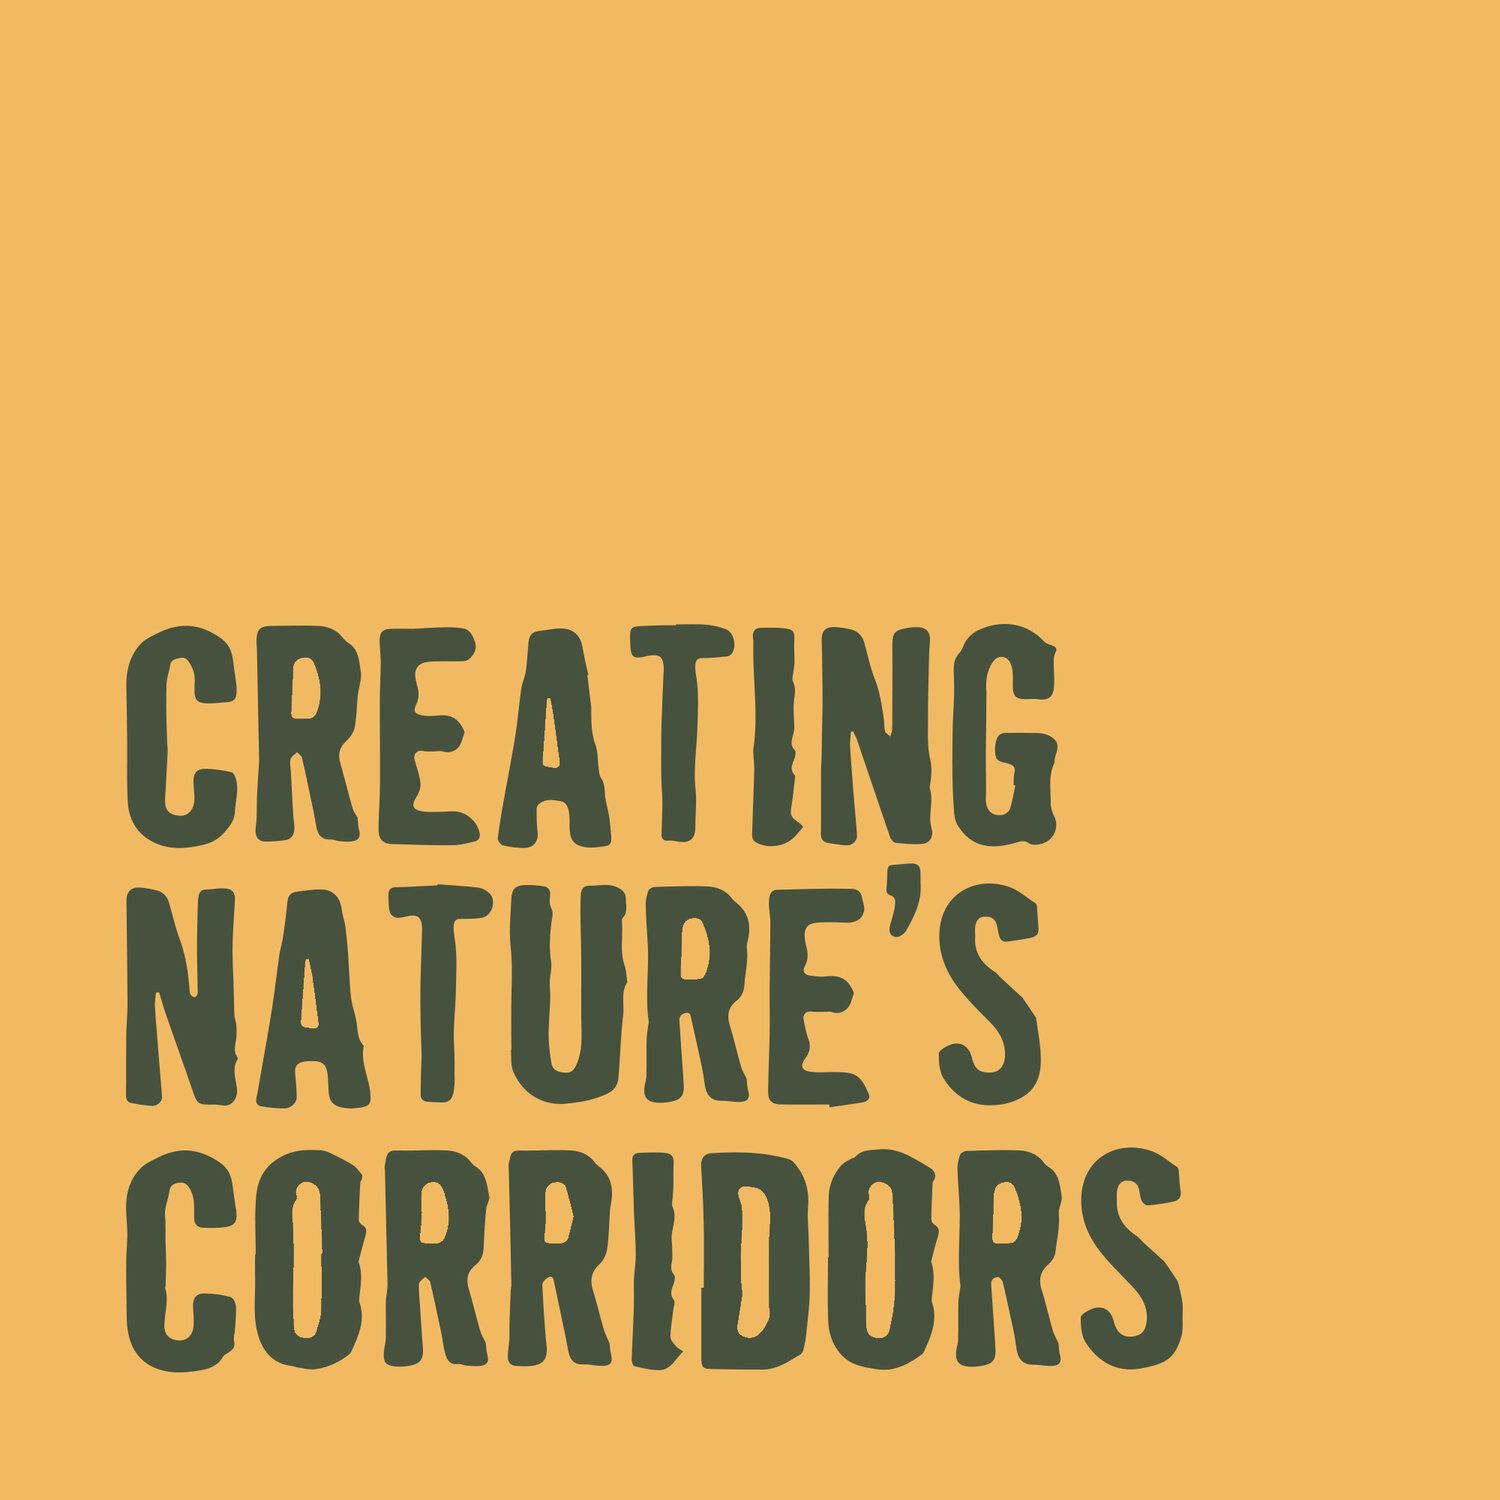 Creating Natures Corridors 